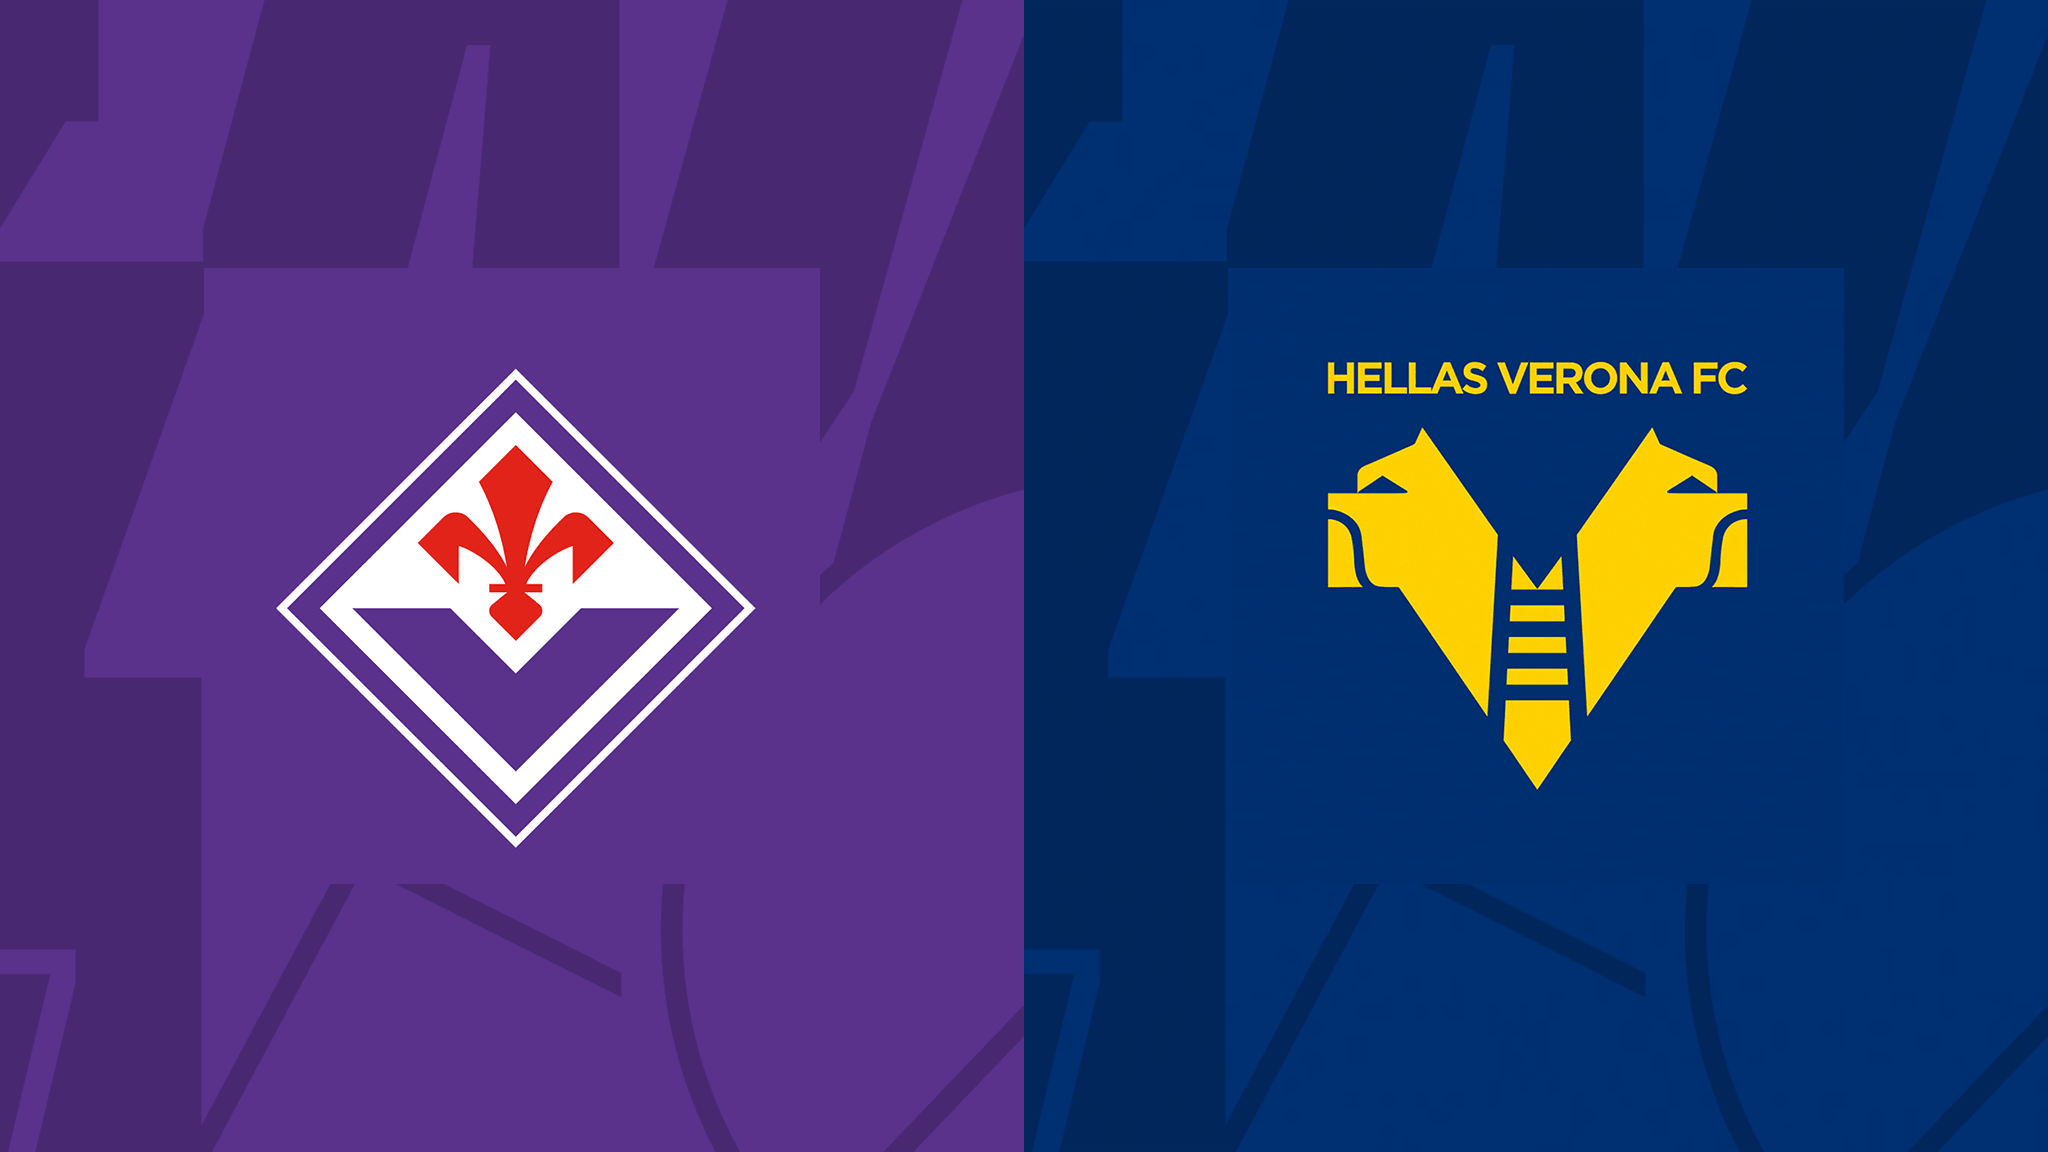 مشاهدة مبارة فيورنتينا و هيلاس فيرونا بث مباشر 18/09/2022 Fiorentina vs Hellas Verona￼